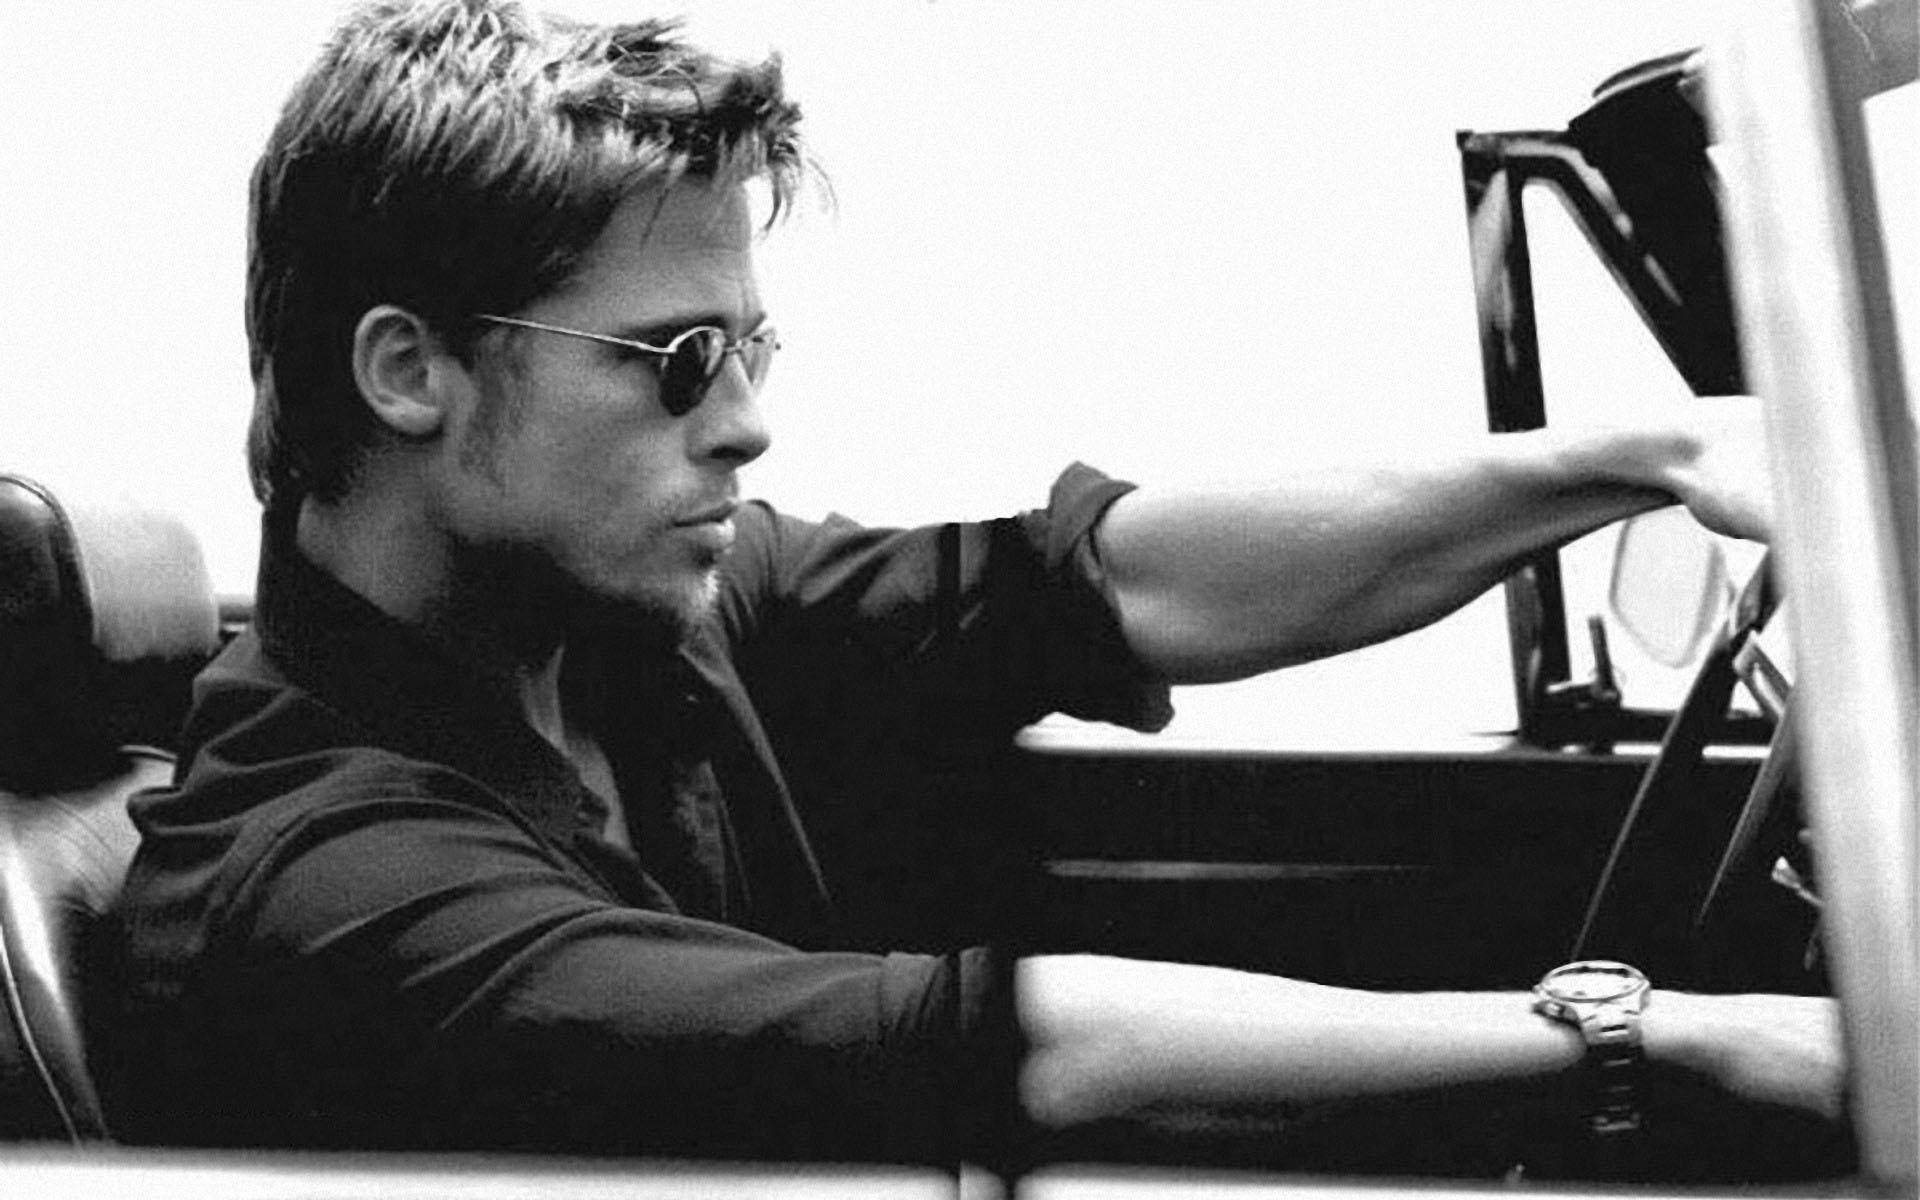 Brad Pitt Wallpaper Pictures